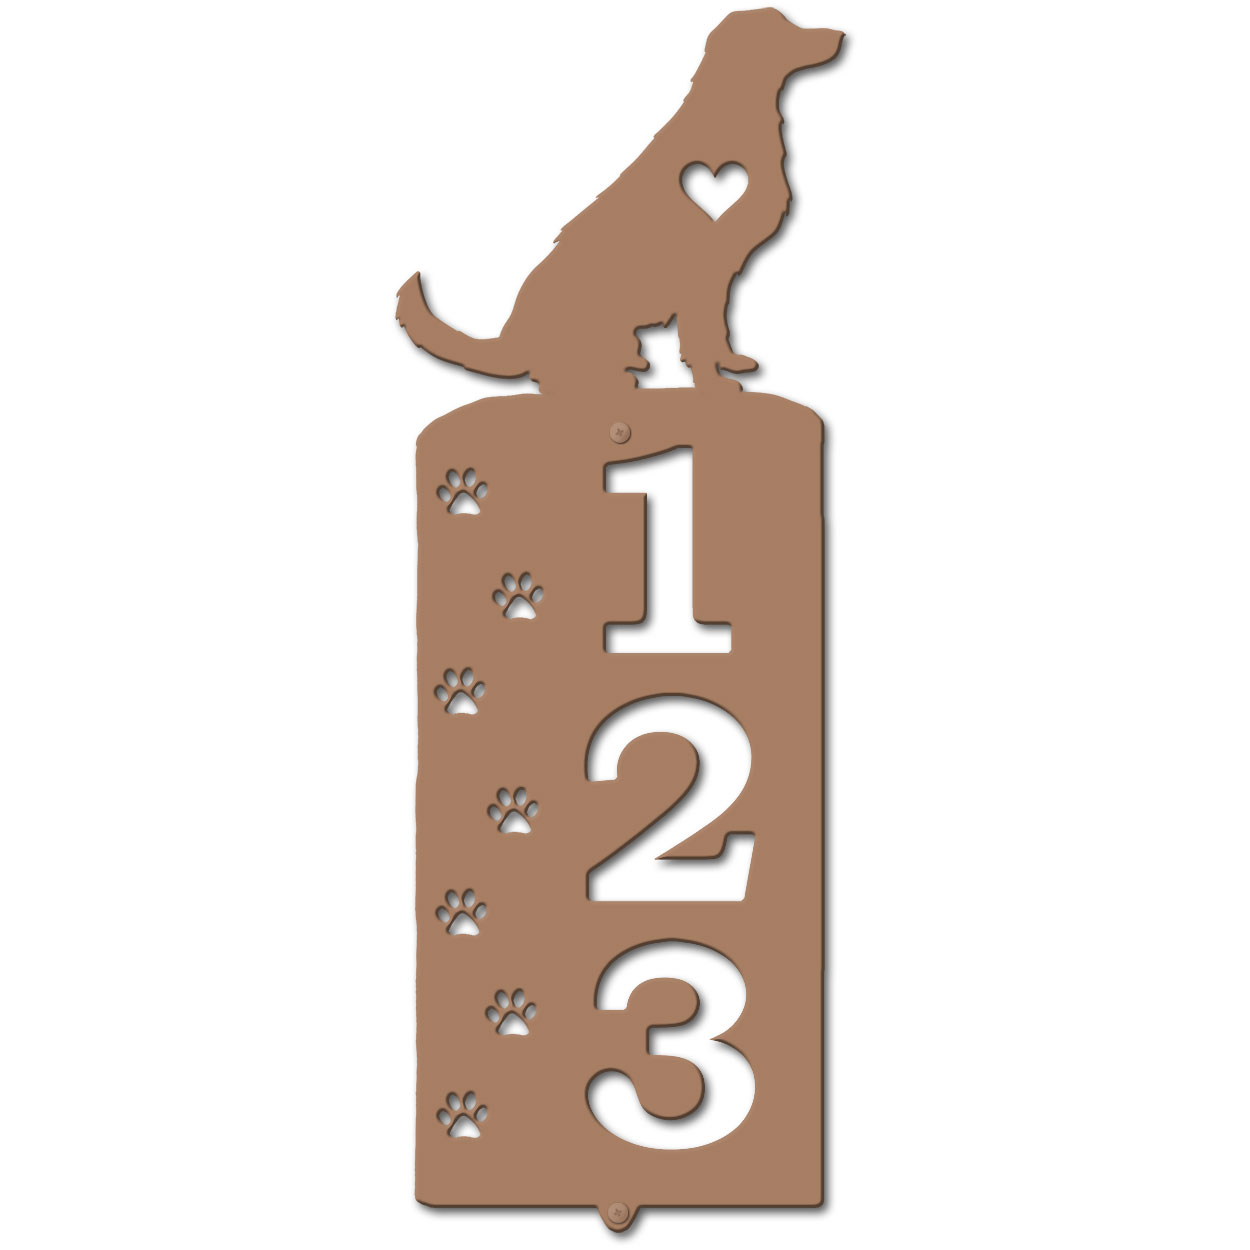 636233 - Golden Retriever Cut Outs Three Digit Address Number Plaque